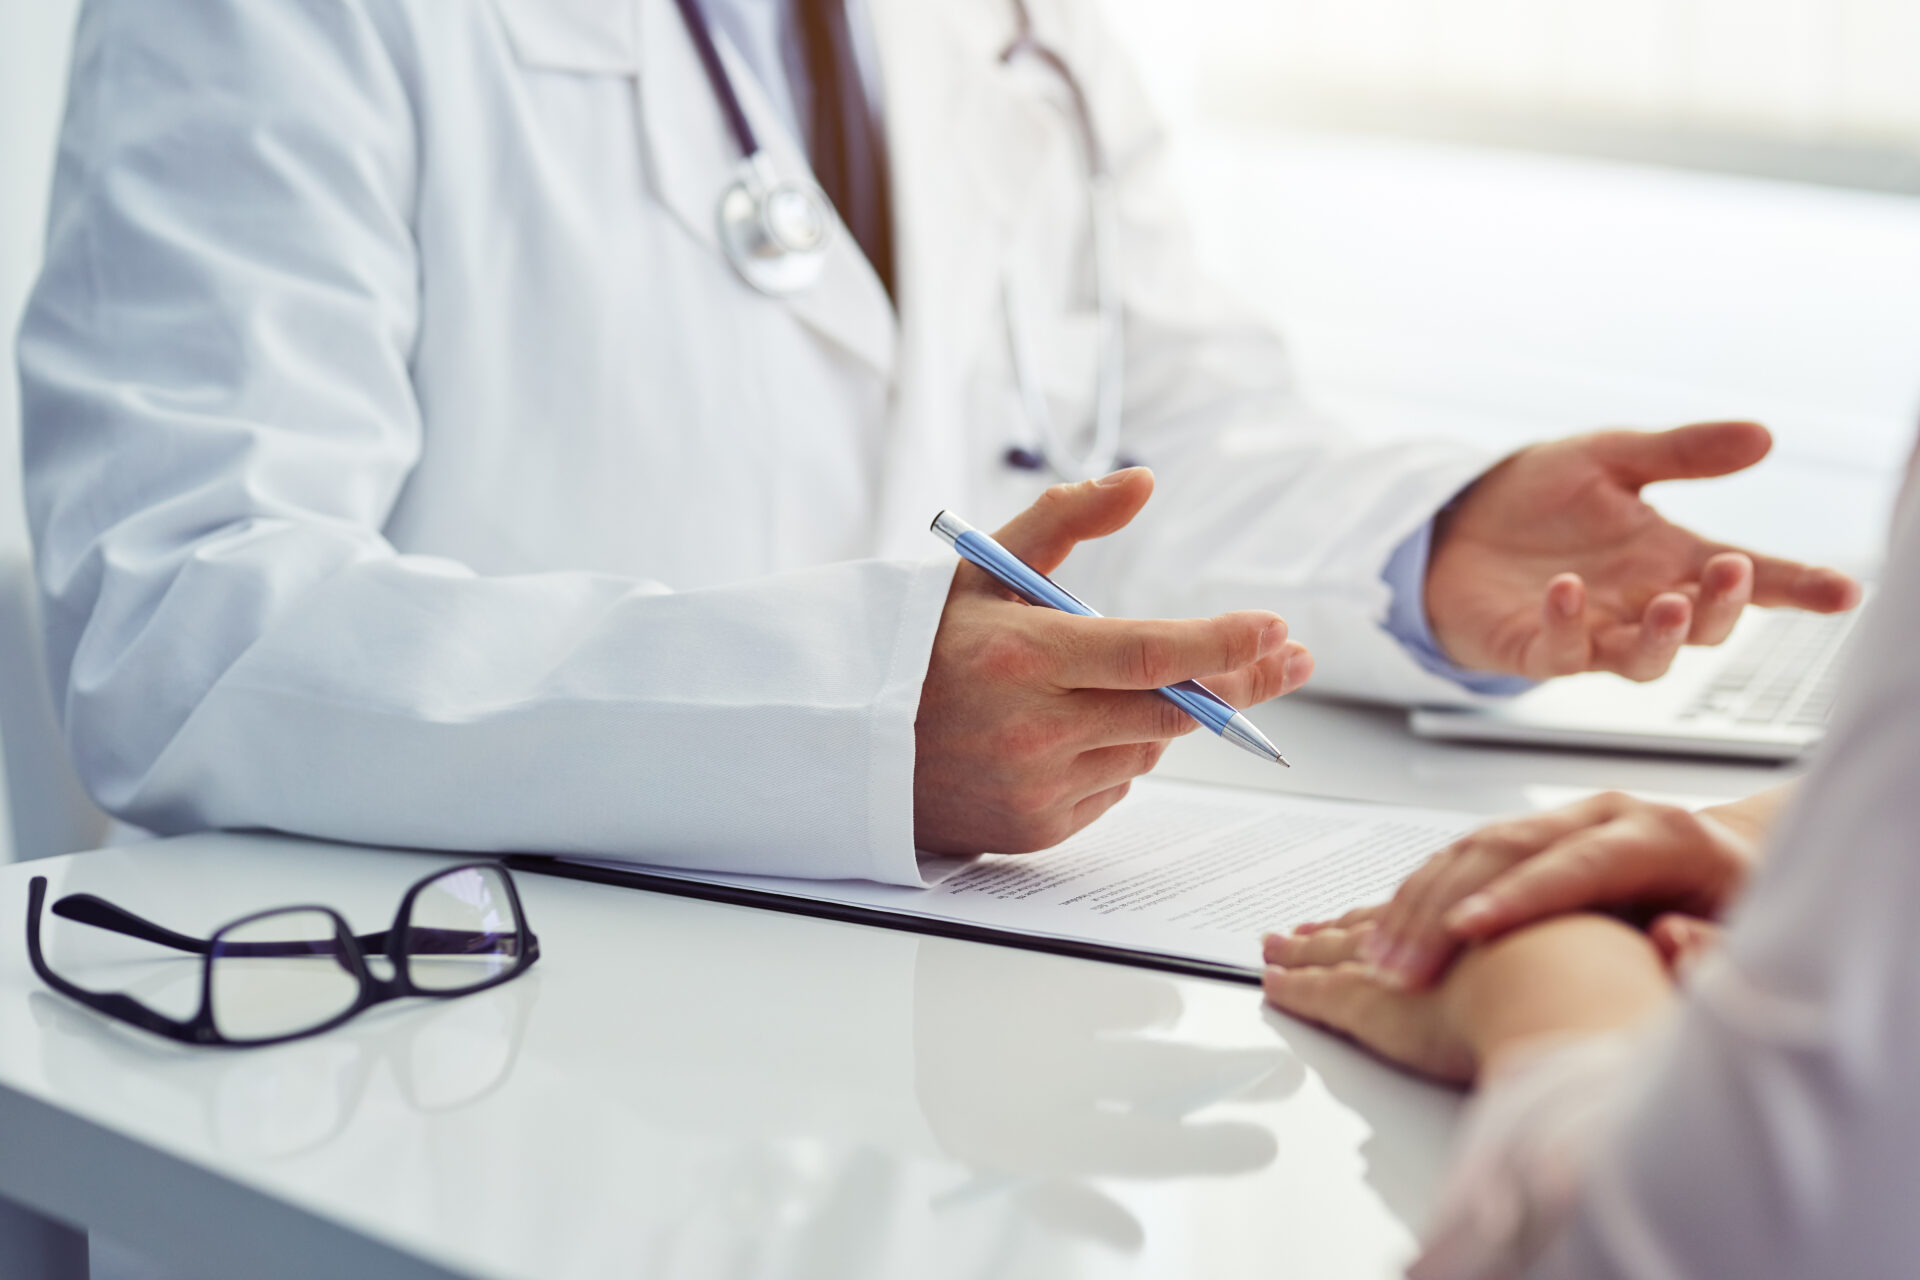 Study Finds Sterilization Rates Rose Post-Dobbs Decision